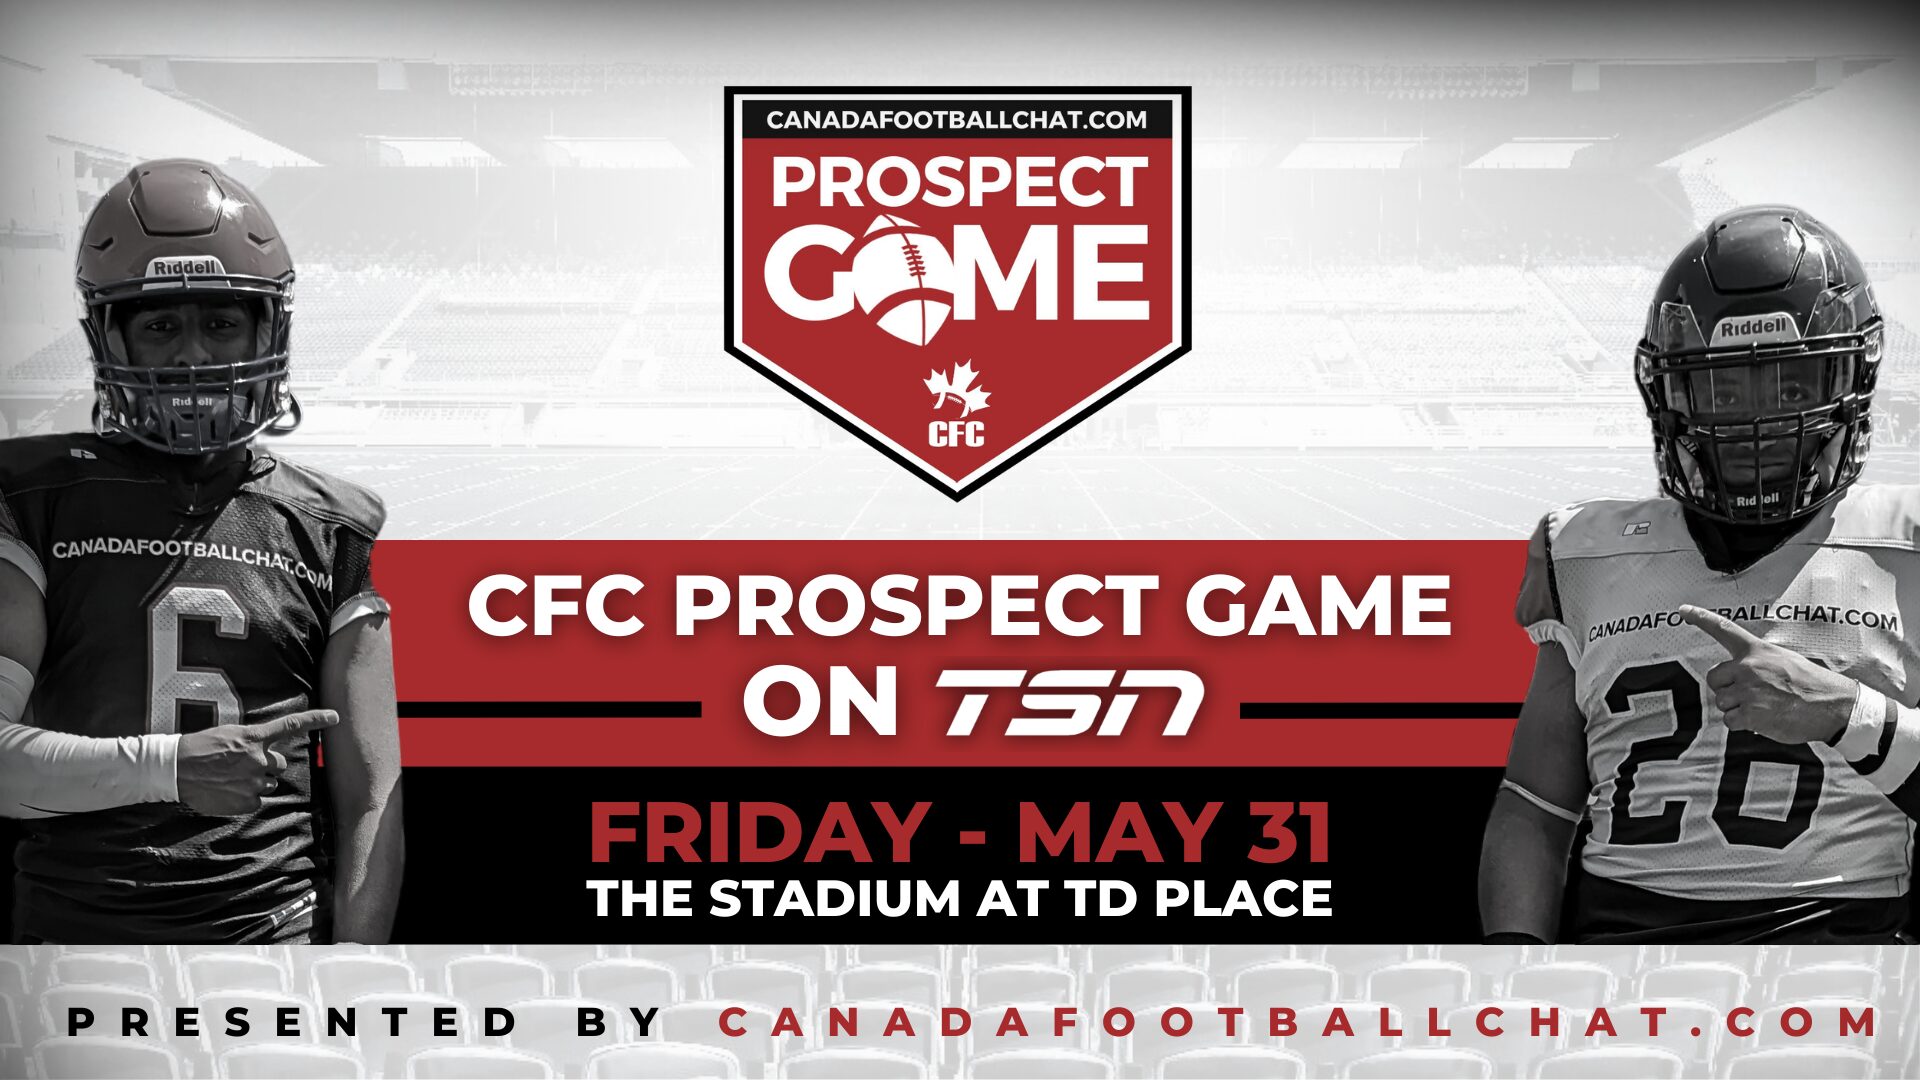 CBC Prospect Game